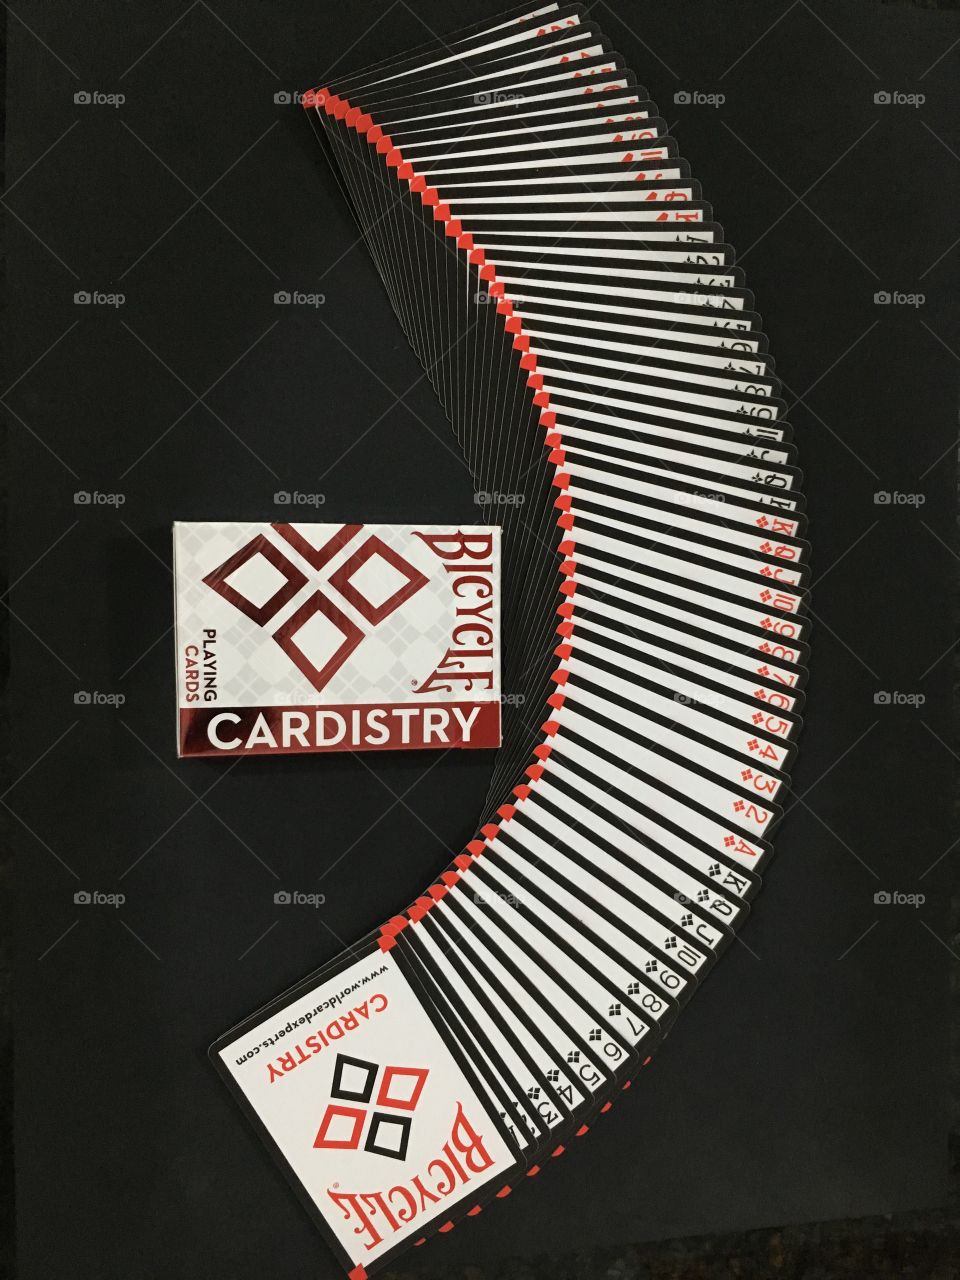 Cardistry